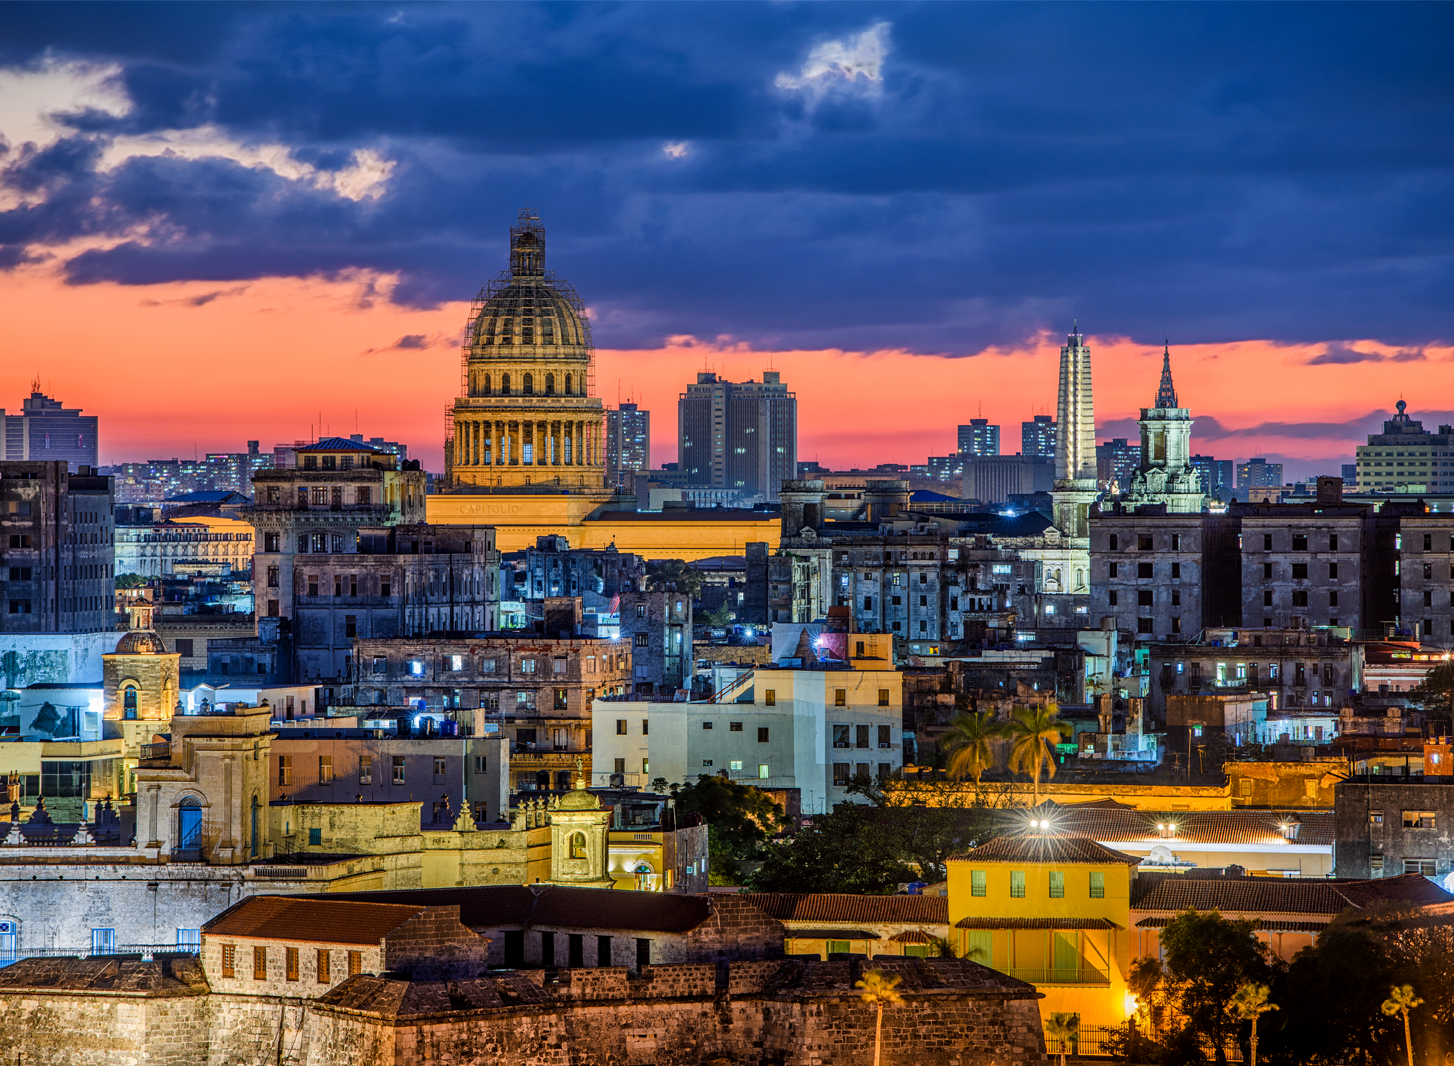 This is an image of Havana, Cuba